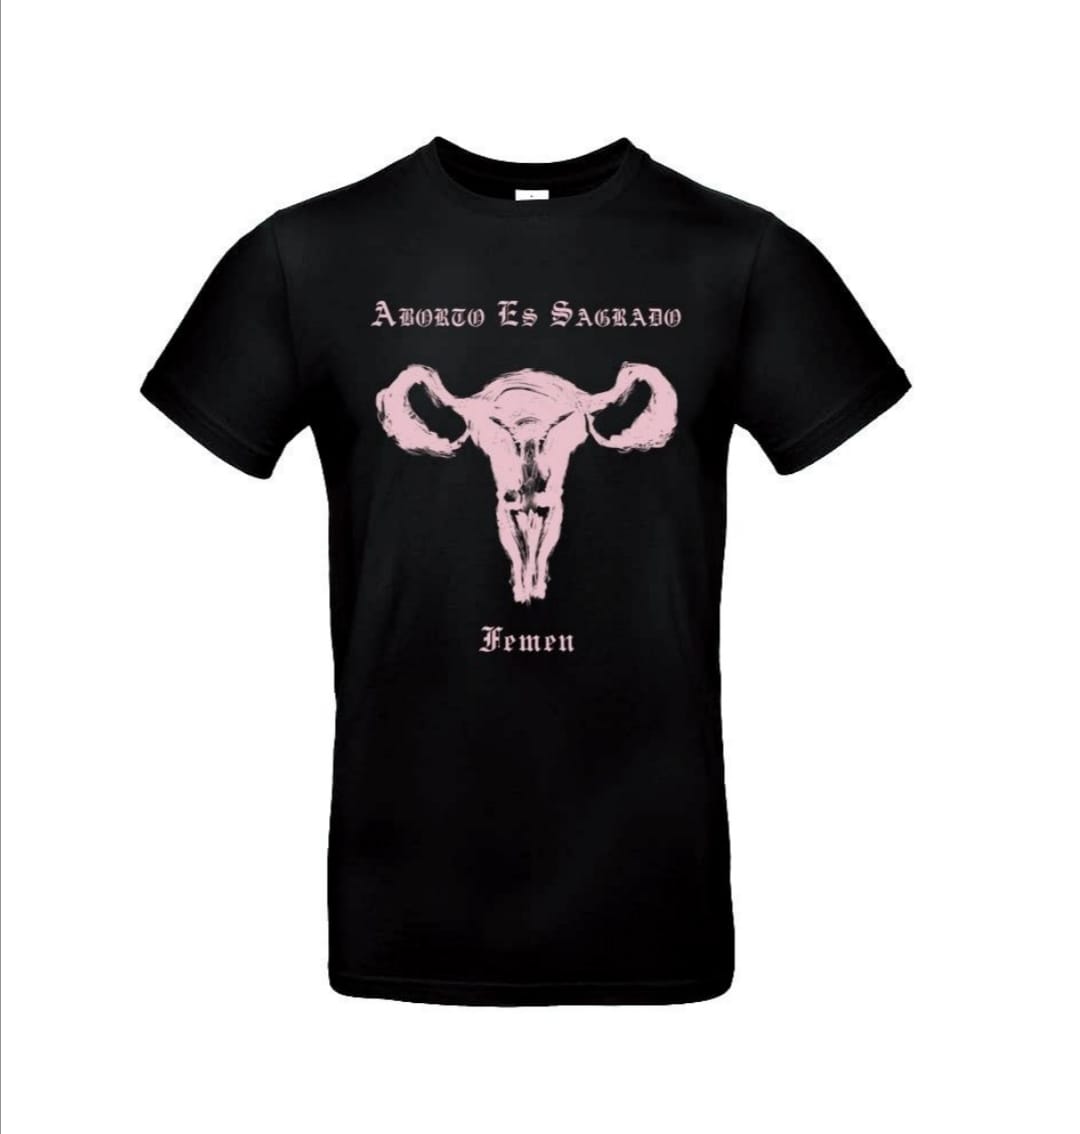 Camiseta Aborto es Sagrado